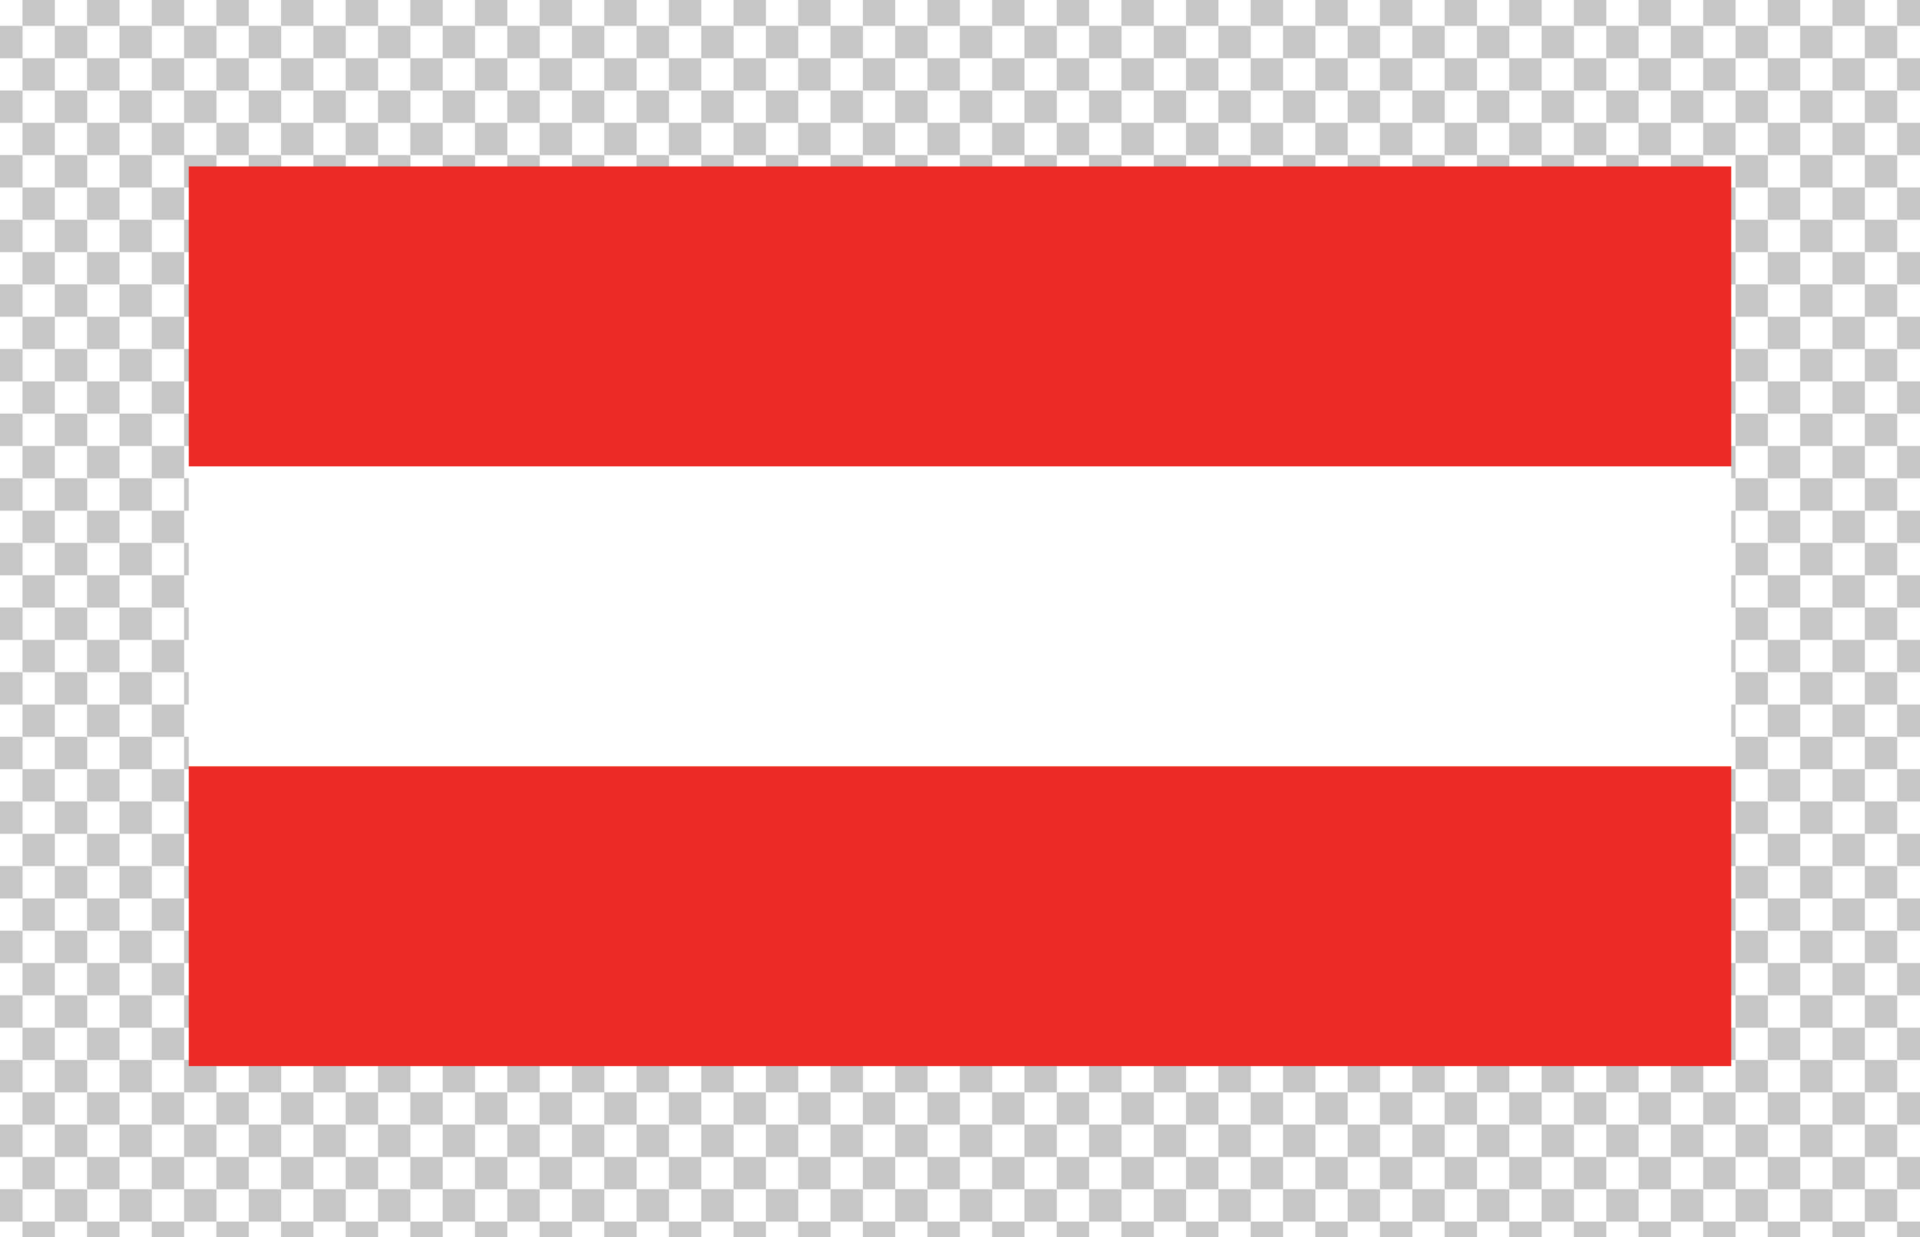 Flag of Austria PNG Image